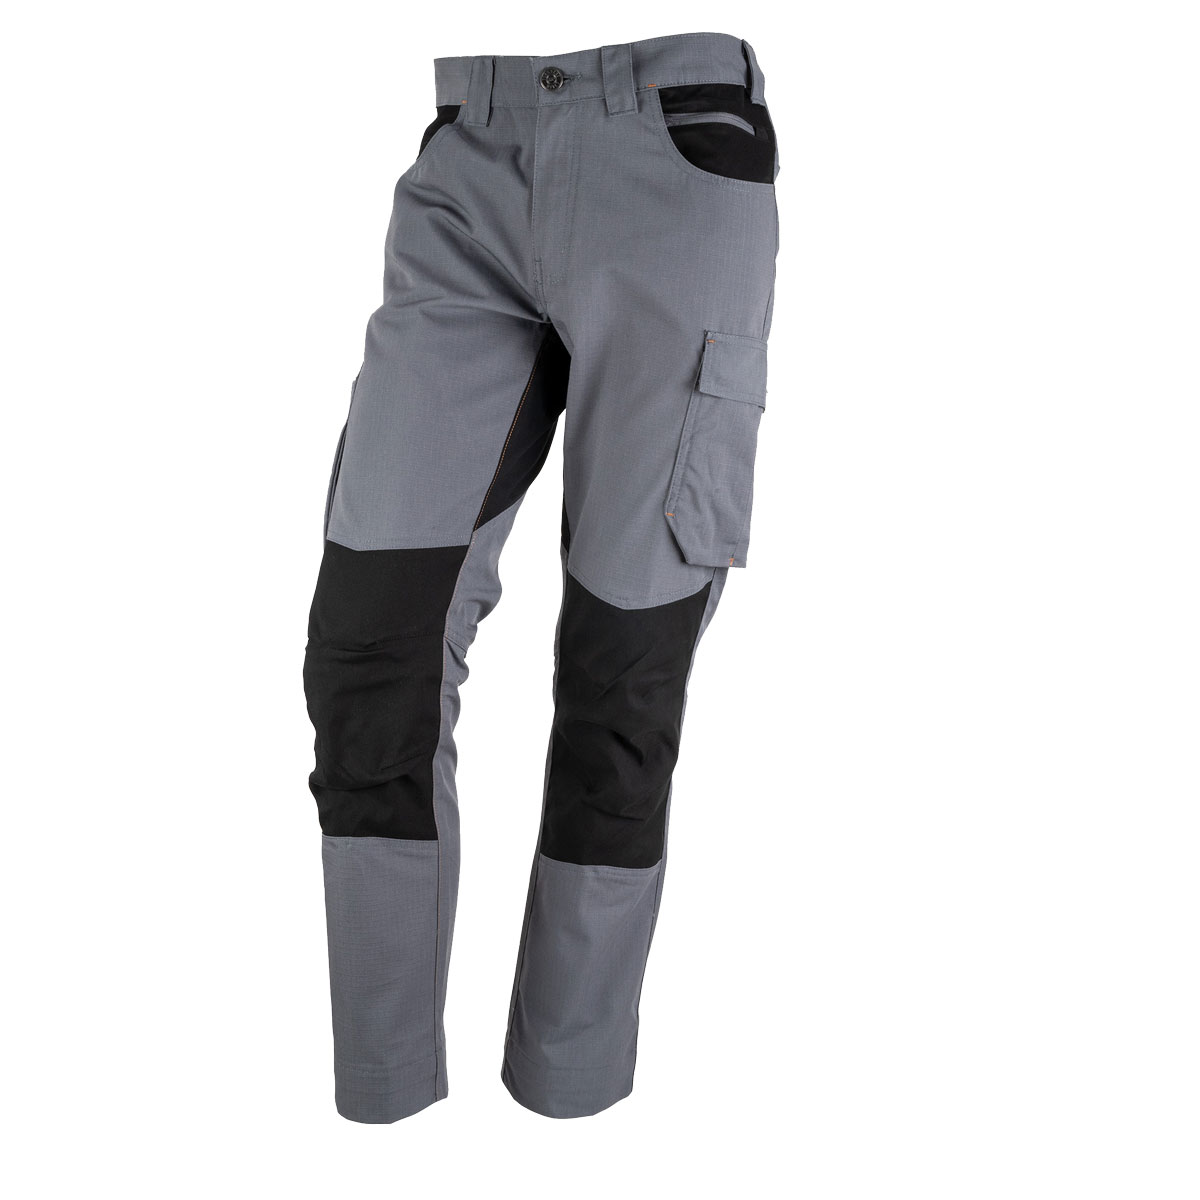 FORSBERG Braxa work trousers with stretch zones and Cordura®